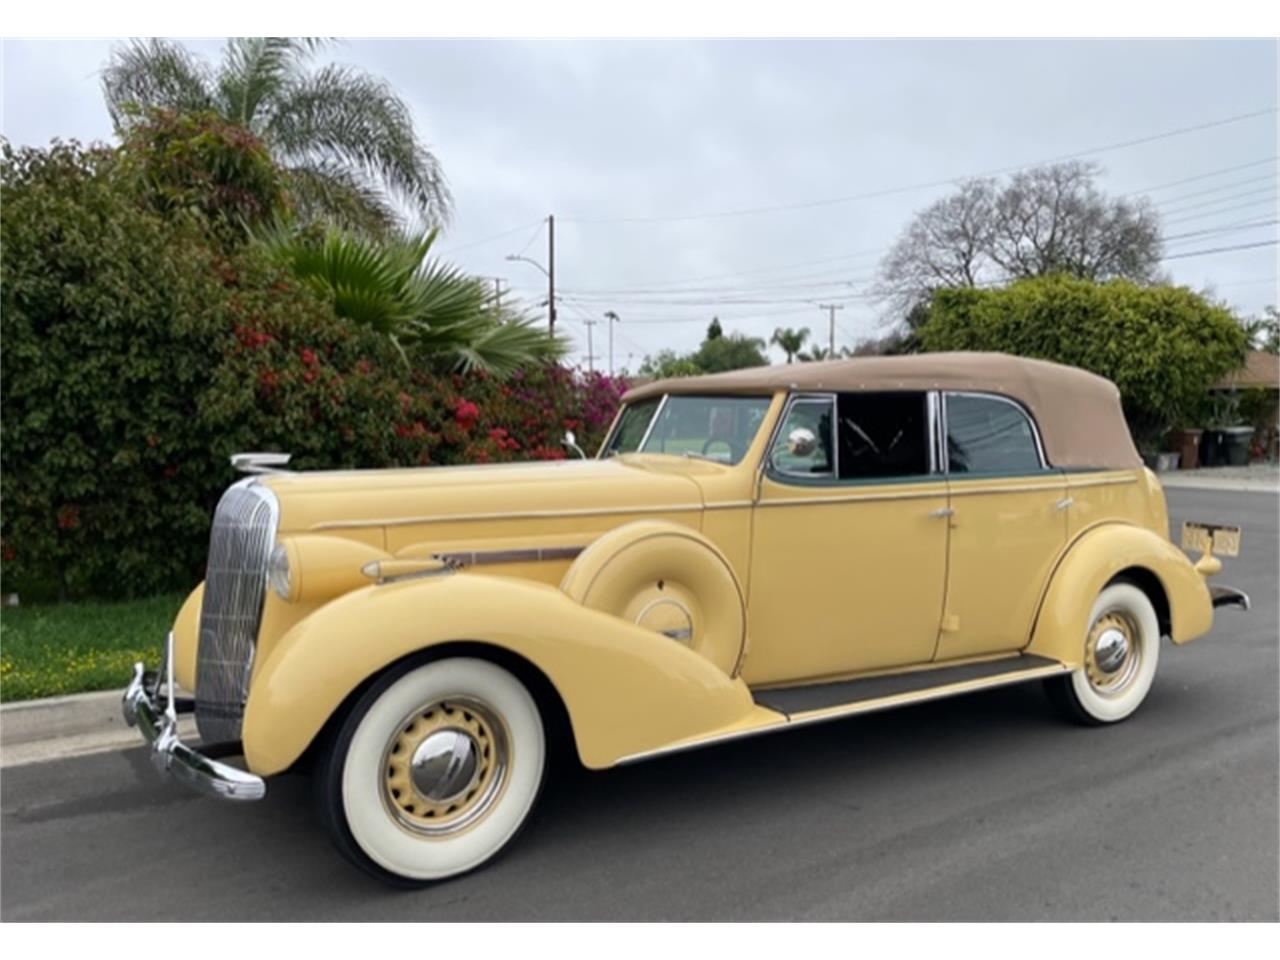 For Sale: 1936 Buick Roadmaster in Garden Grove, California for sale in Garden Grove, CA